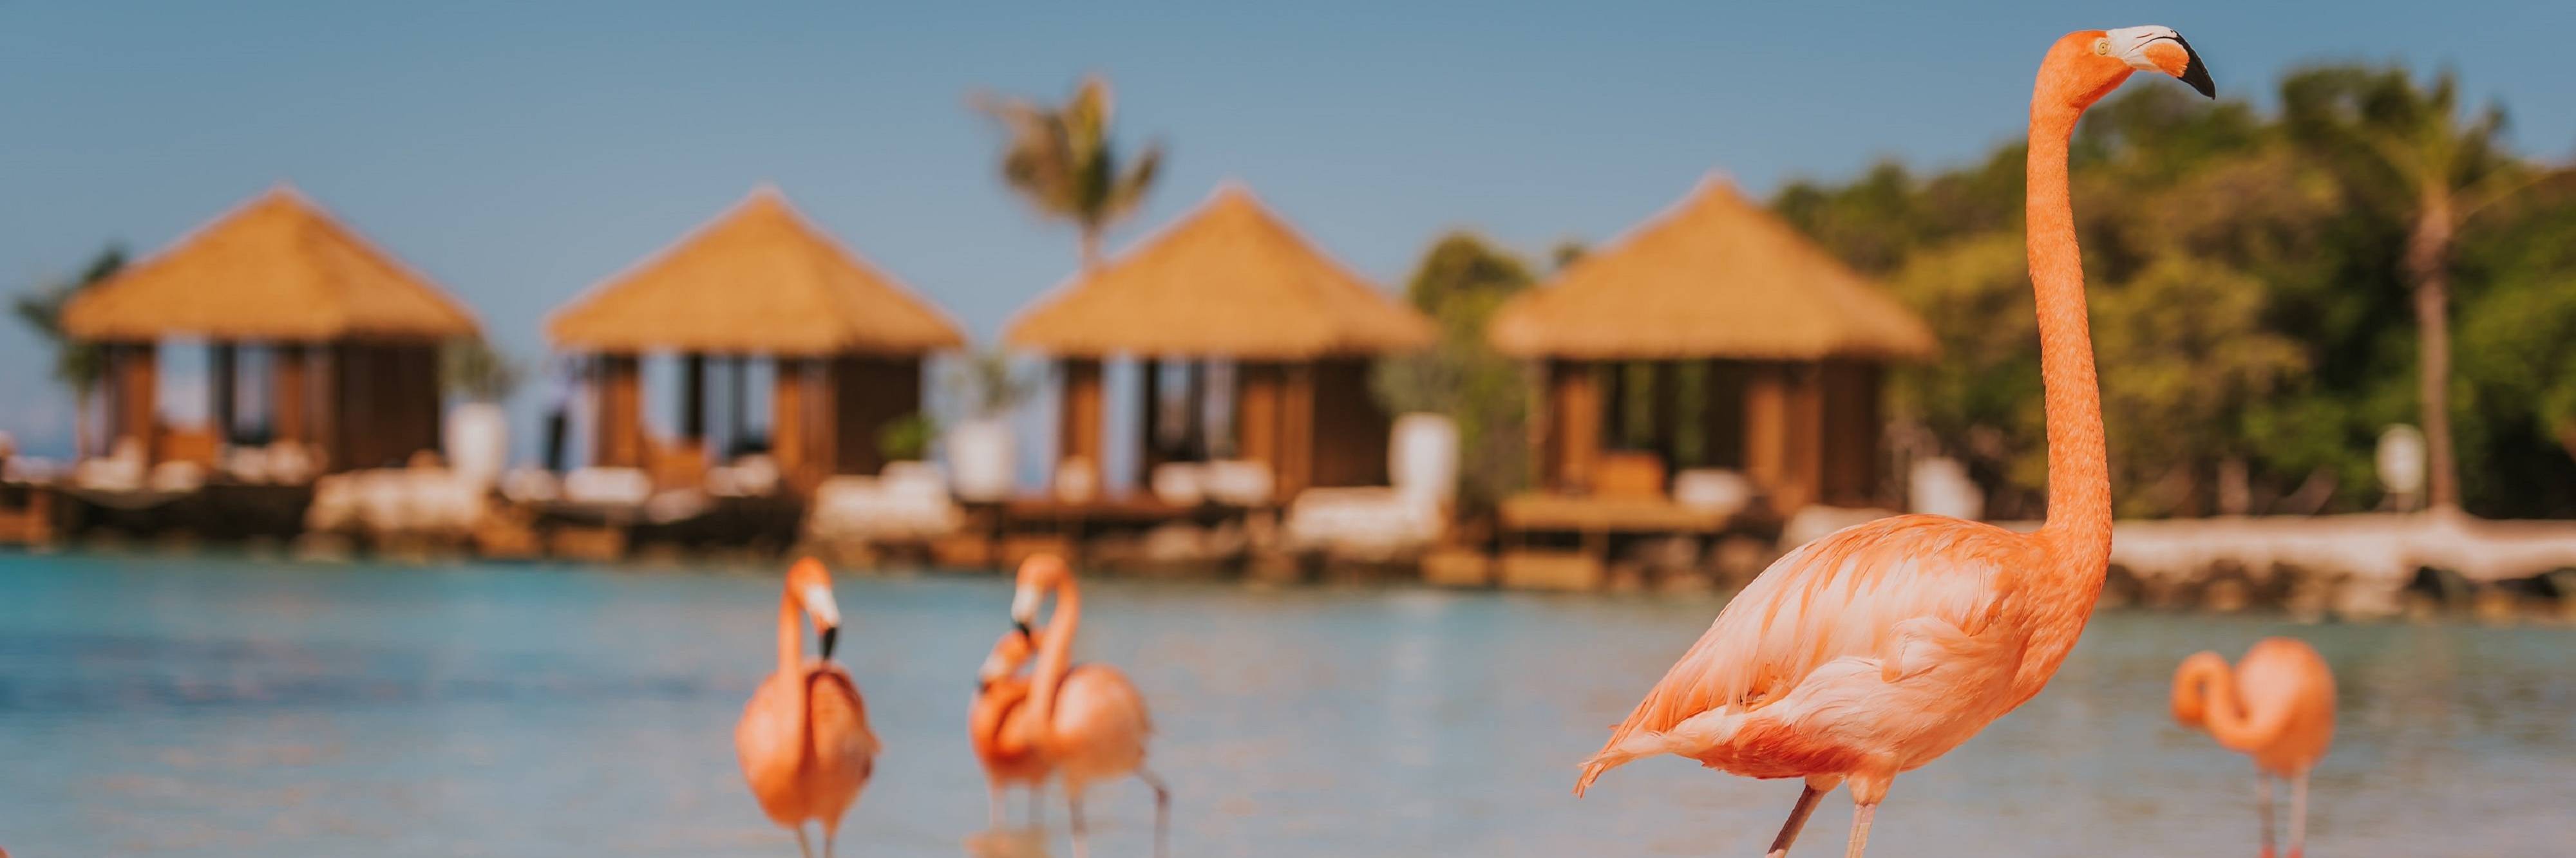 Flamingos on beach